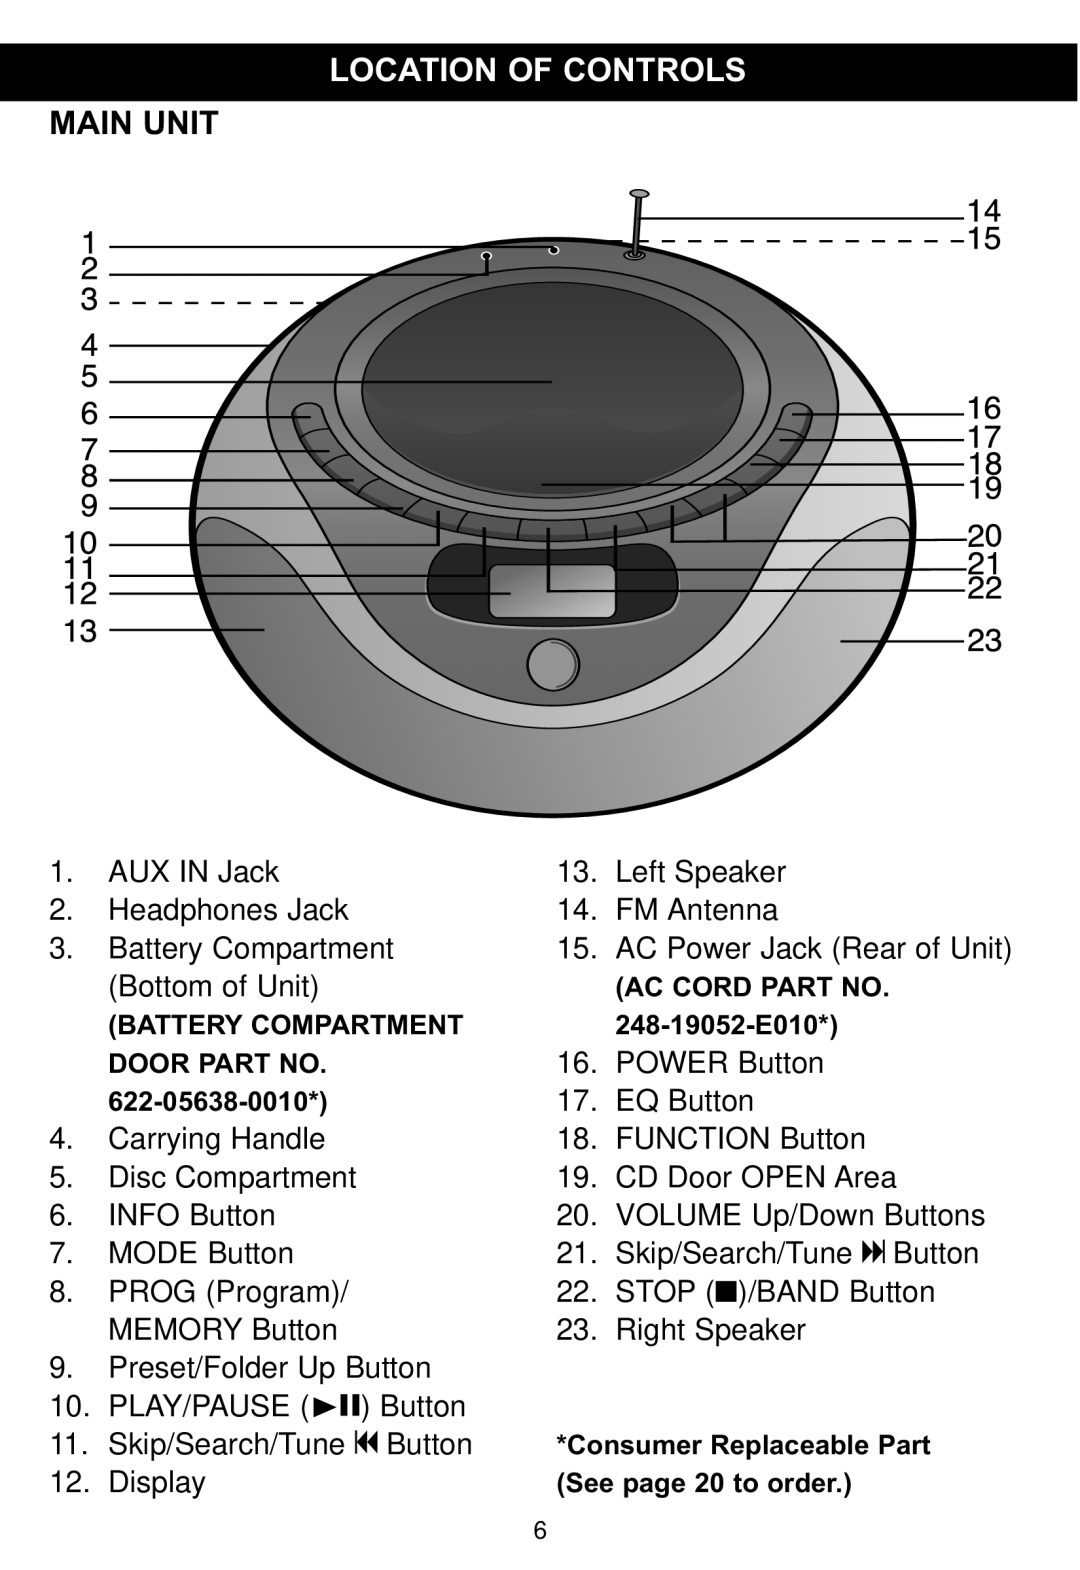 Memorex MP4047 manual Main Unit, Location Of Controls 